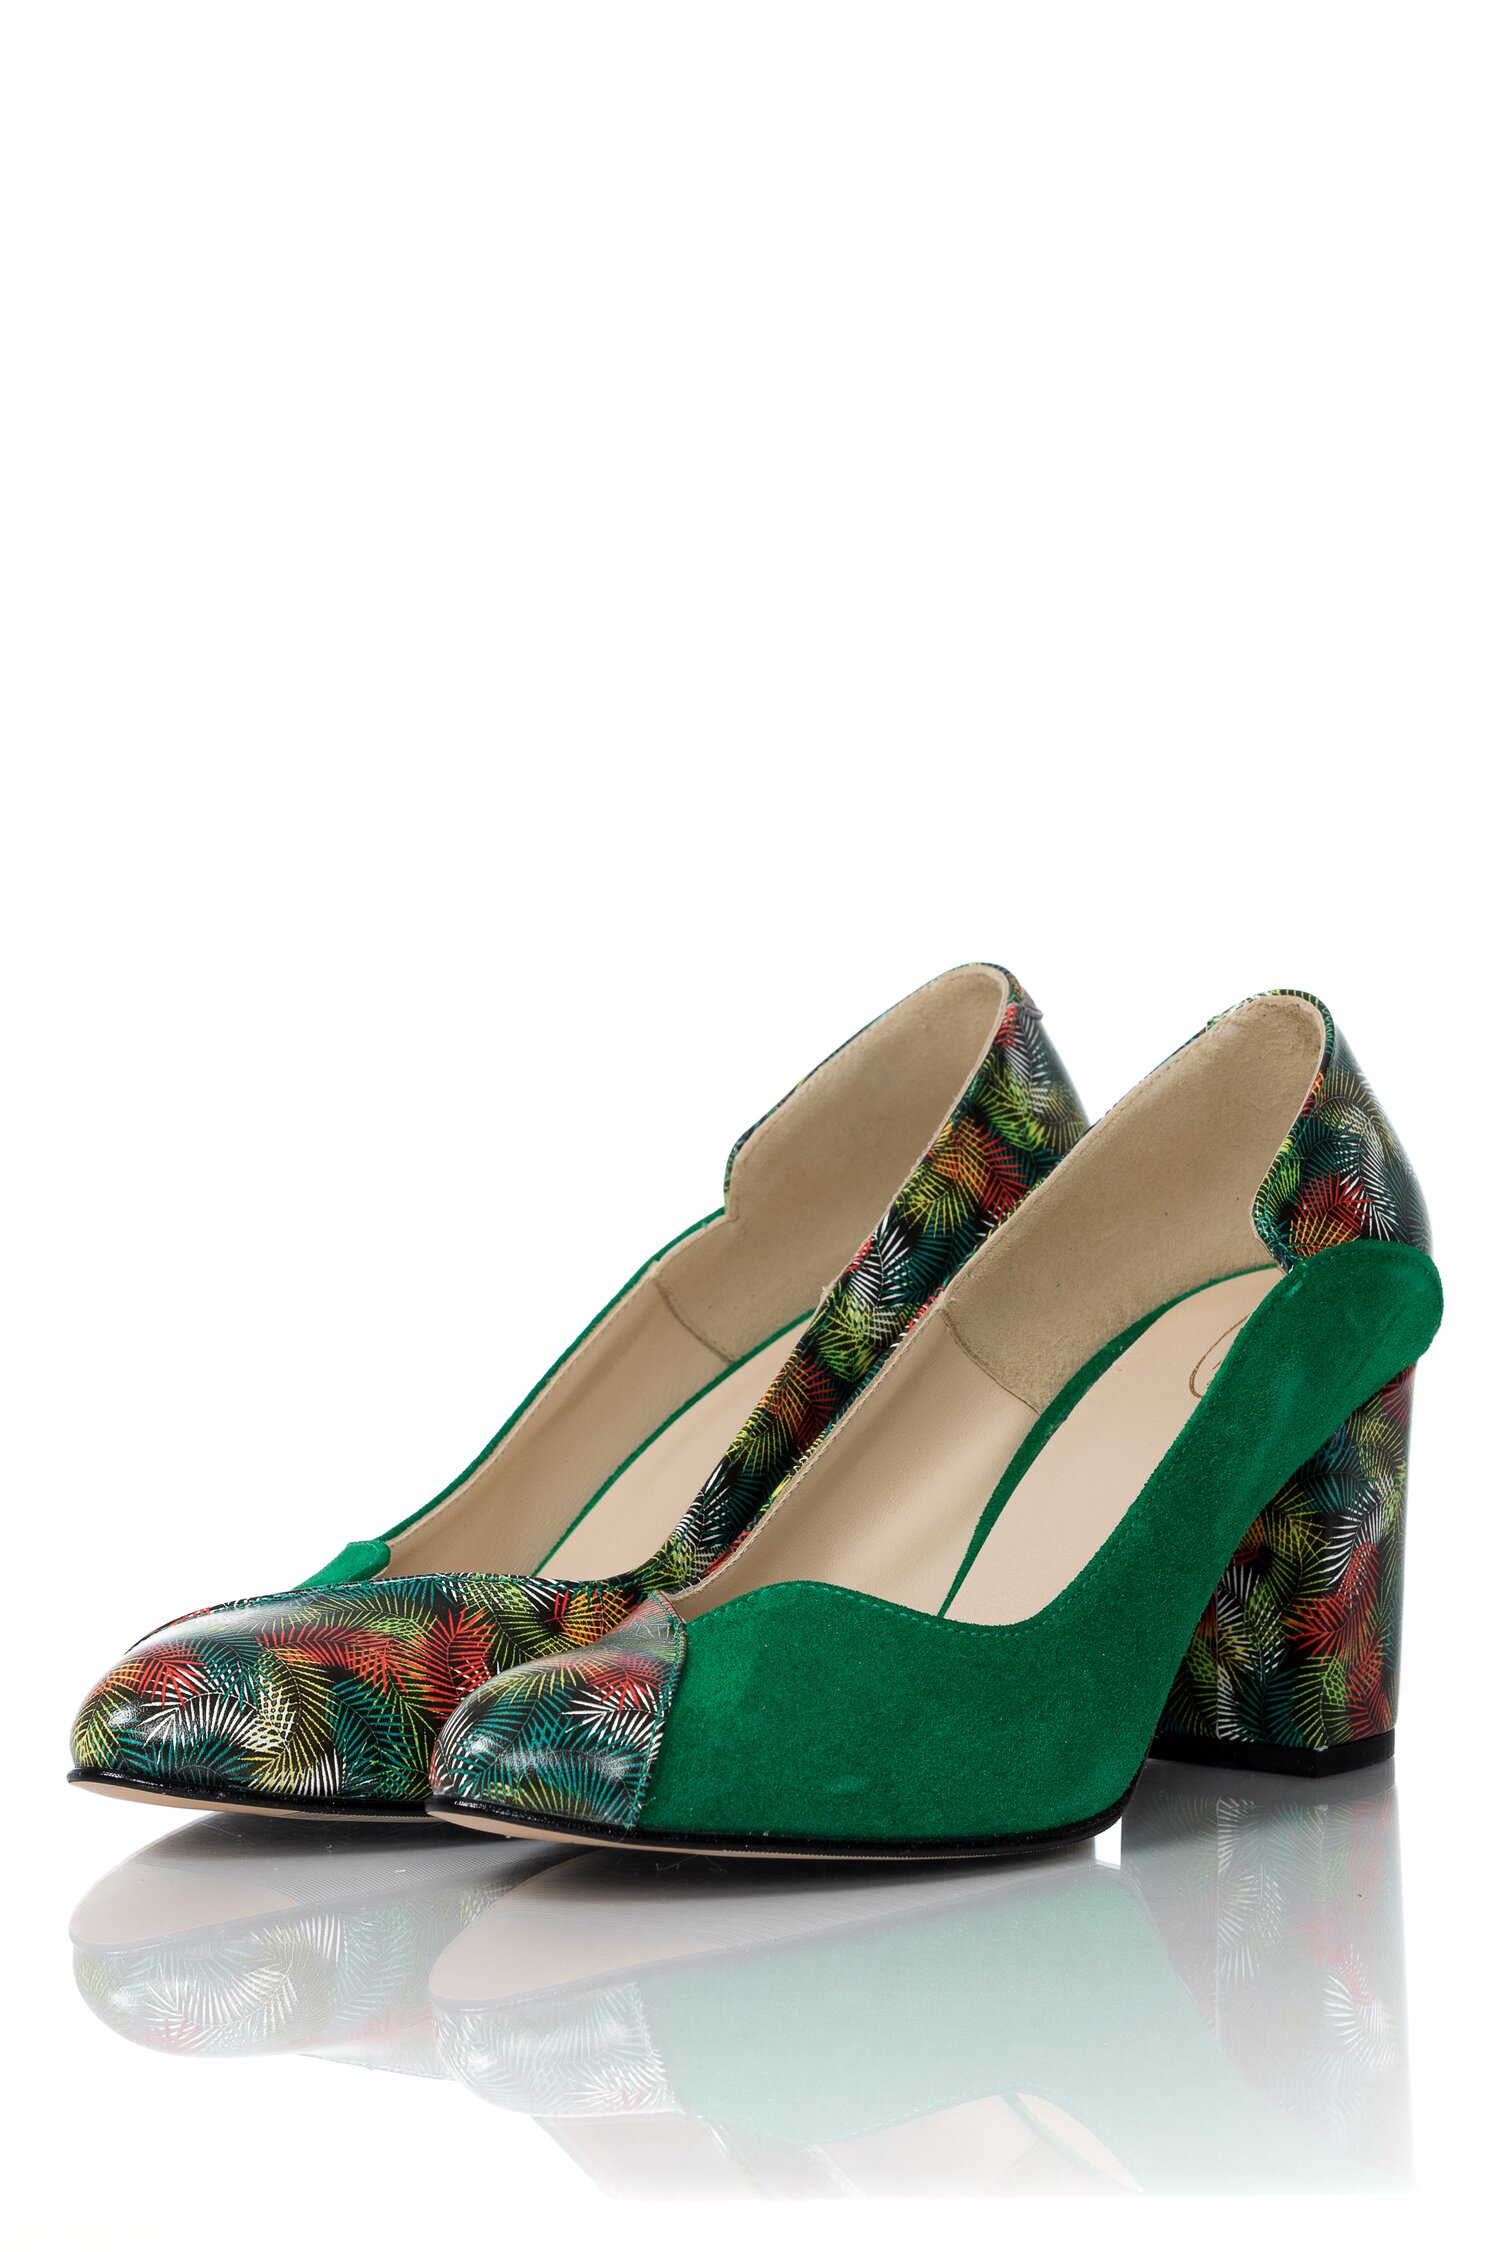 Pantofi Mara verzi cu imprimeu floral image3